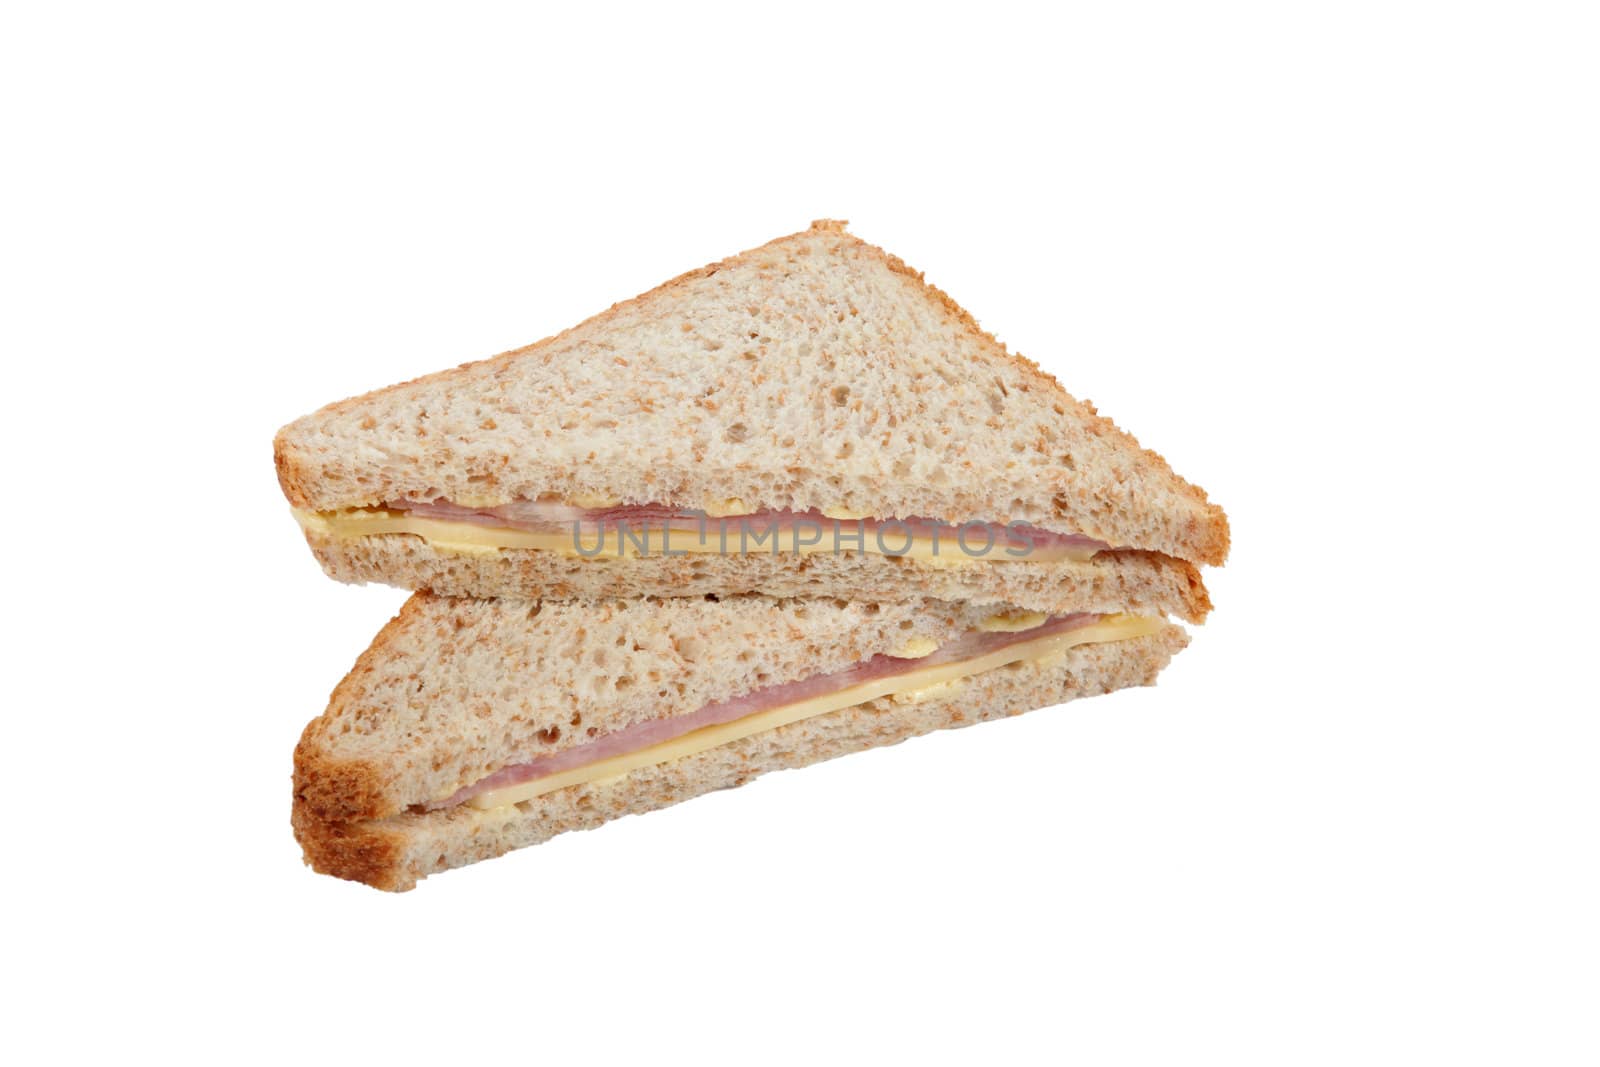 Two halves of a ham sandwich on brown bread